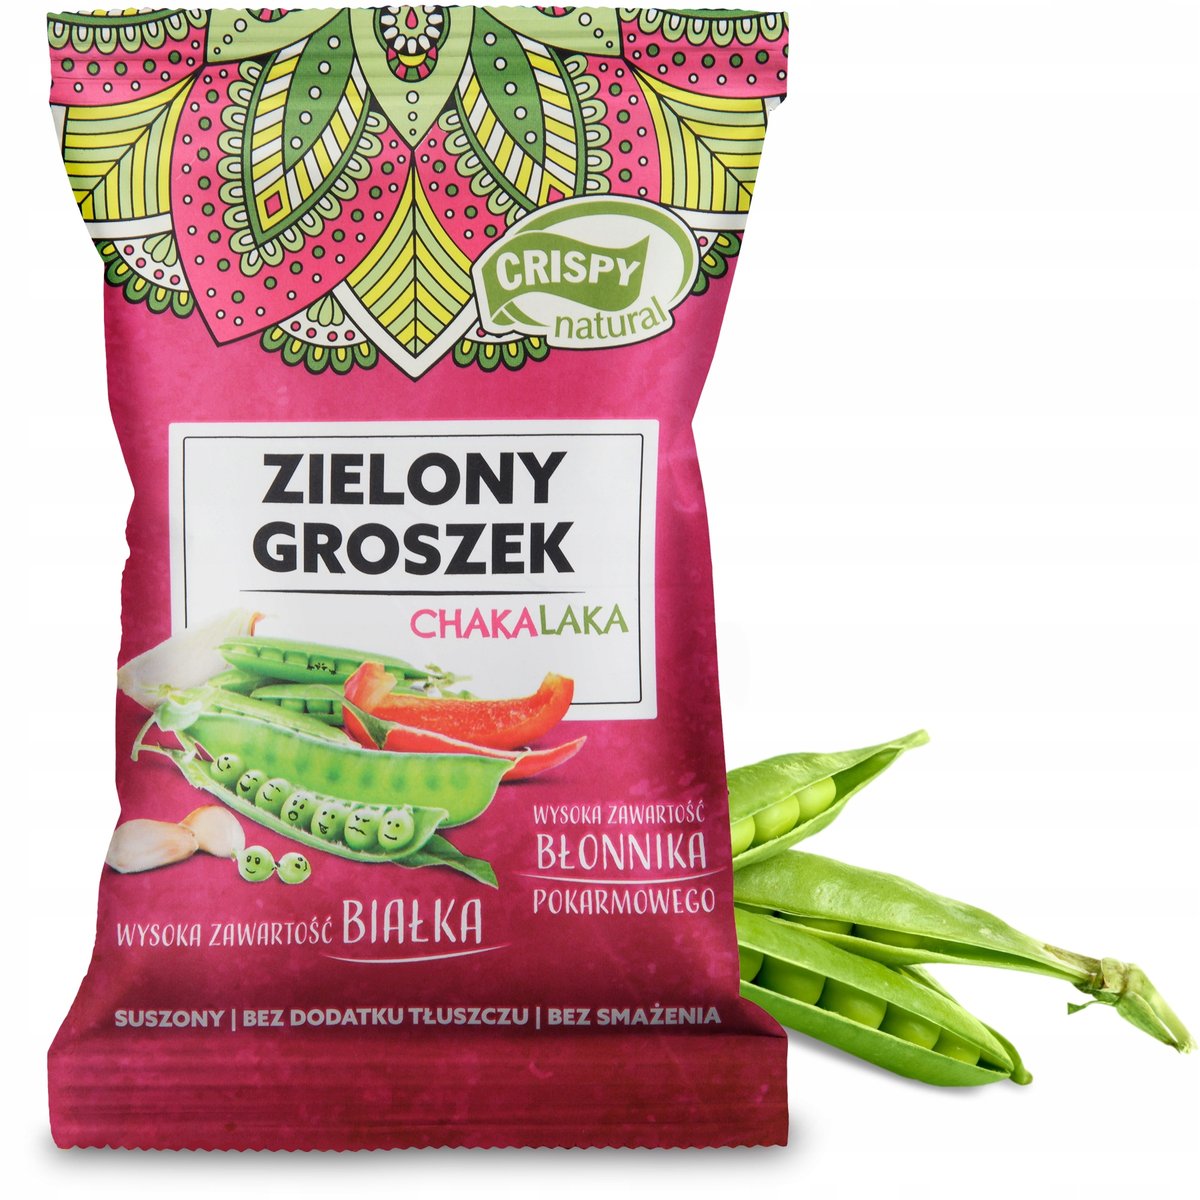 Crispy Natural Suszone Chipsy Zielony Groszek Chakalaka 25g -